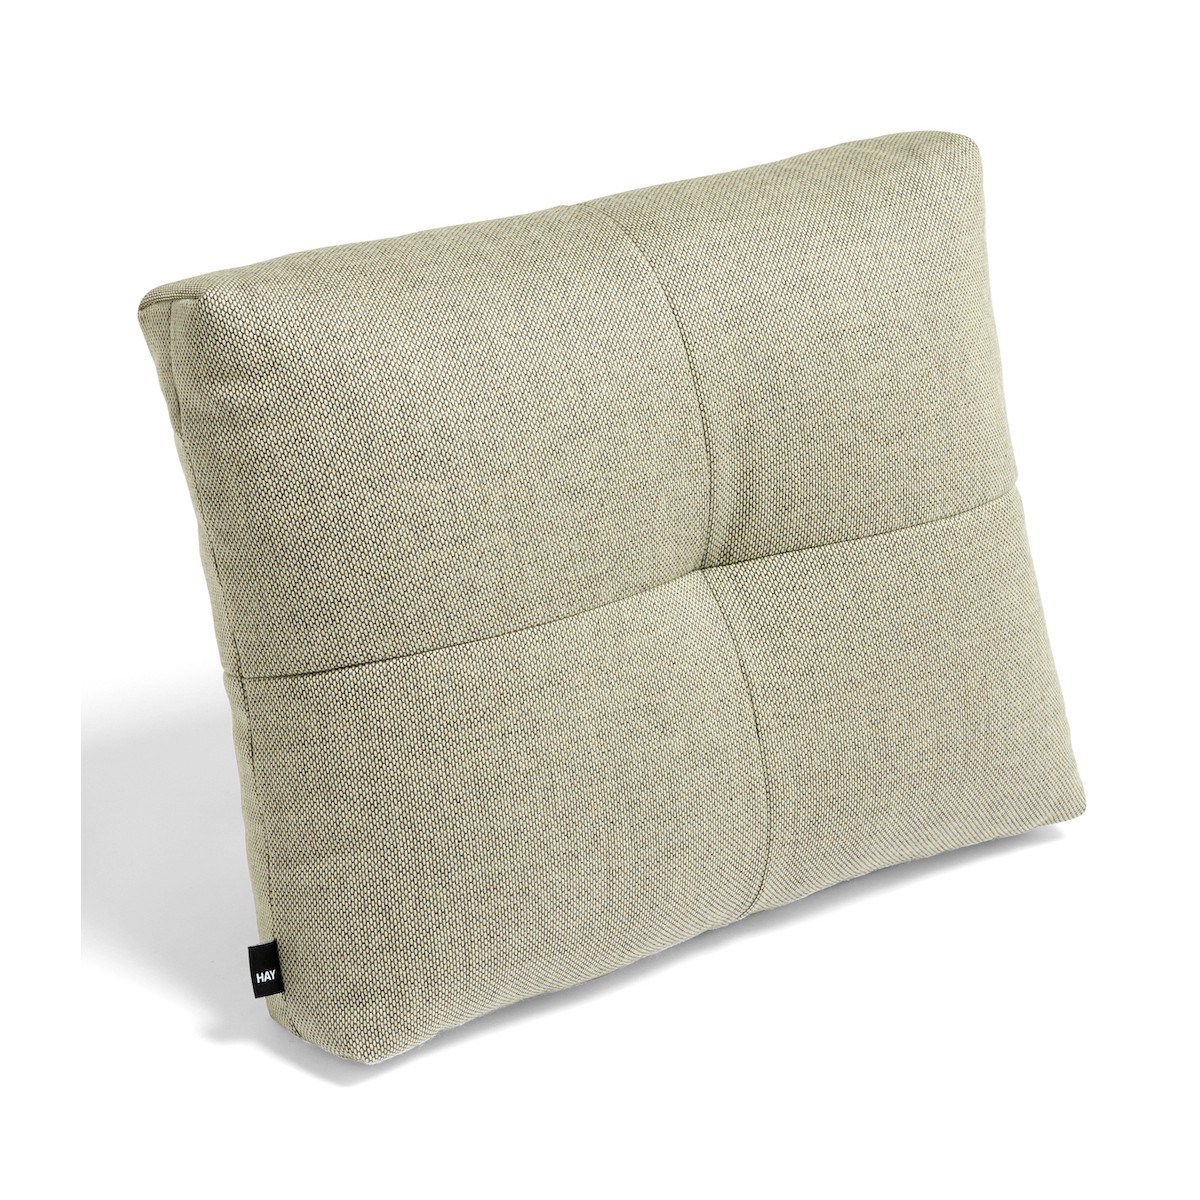 Re-wool 408 - Quilton cushion - HAY modular sofa